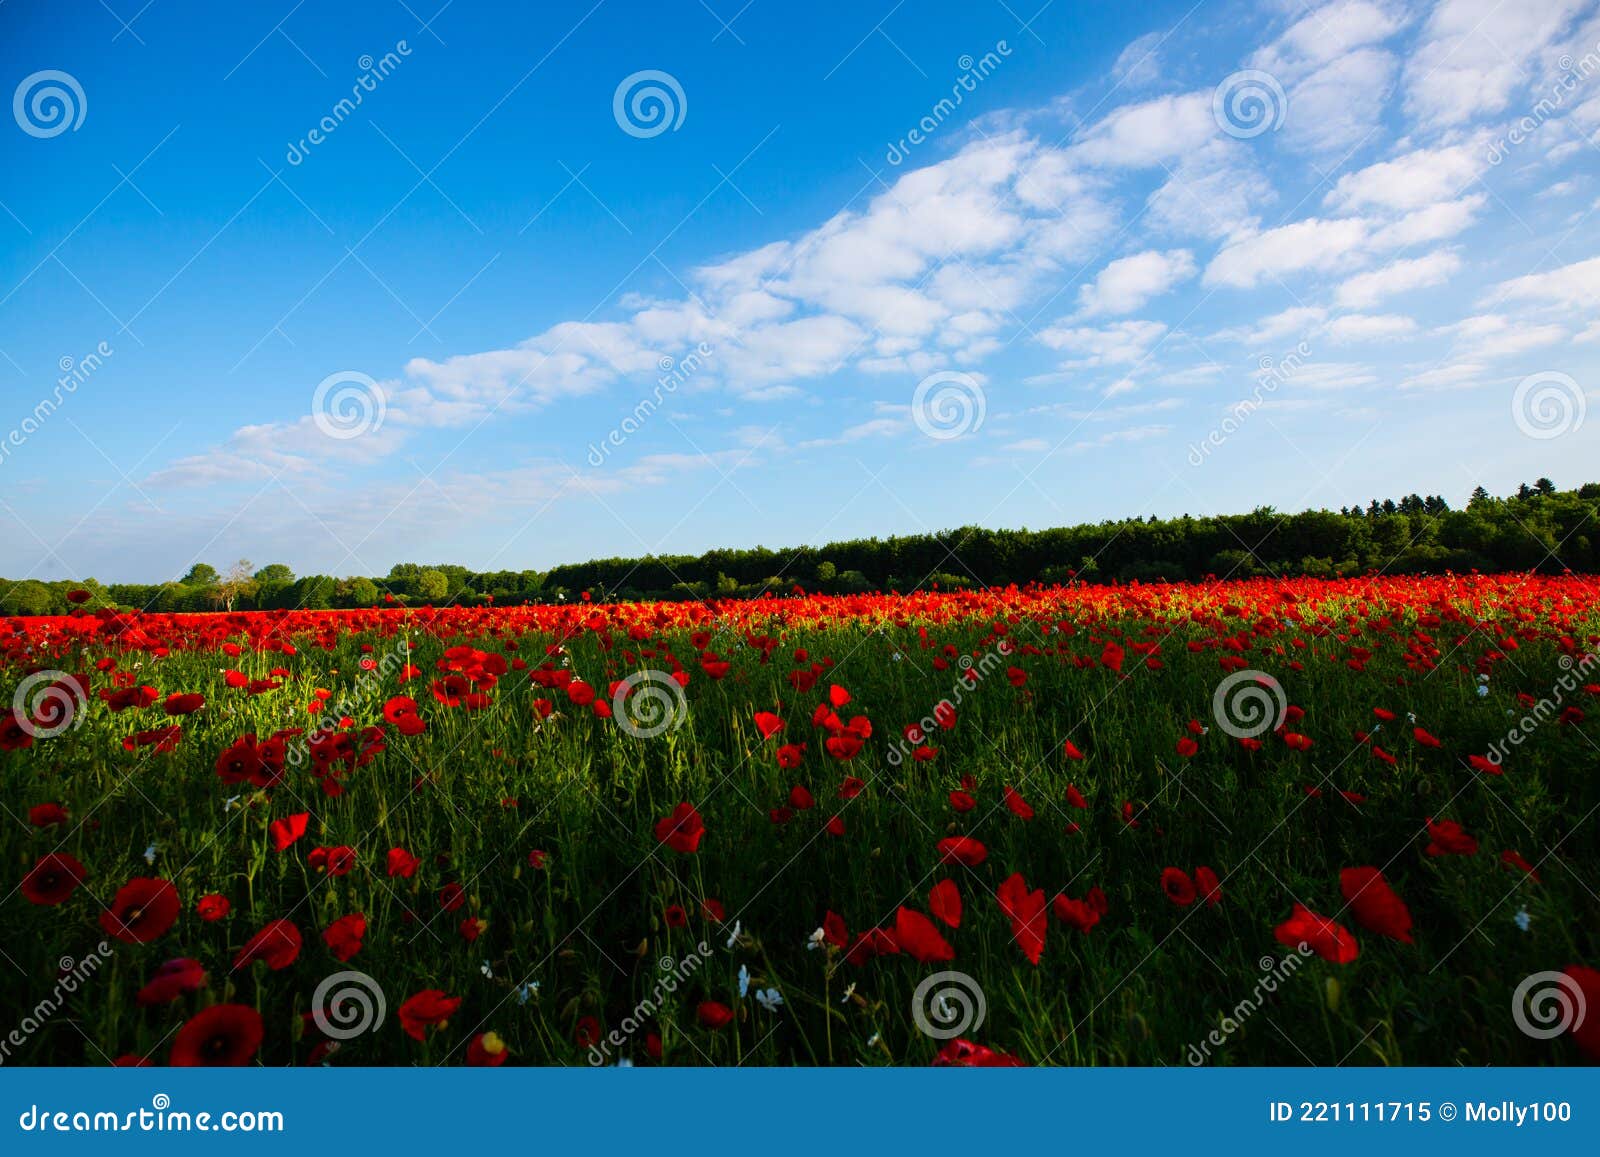 field of poppies, nature, blue sky, joie de vivre